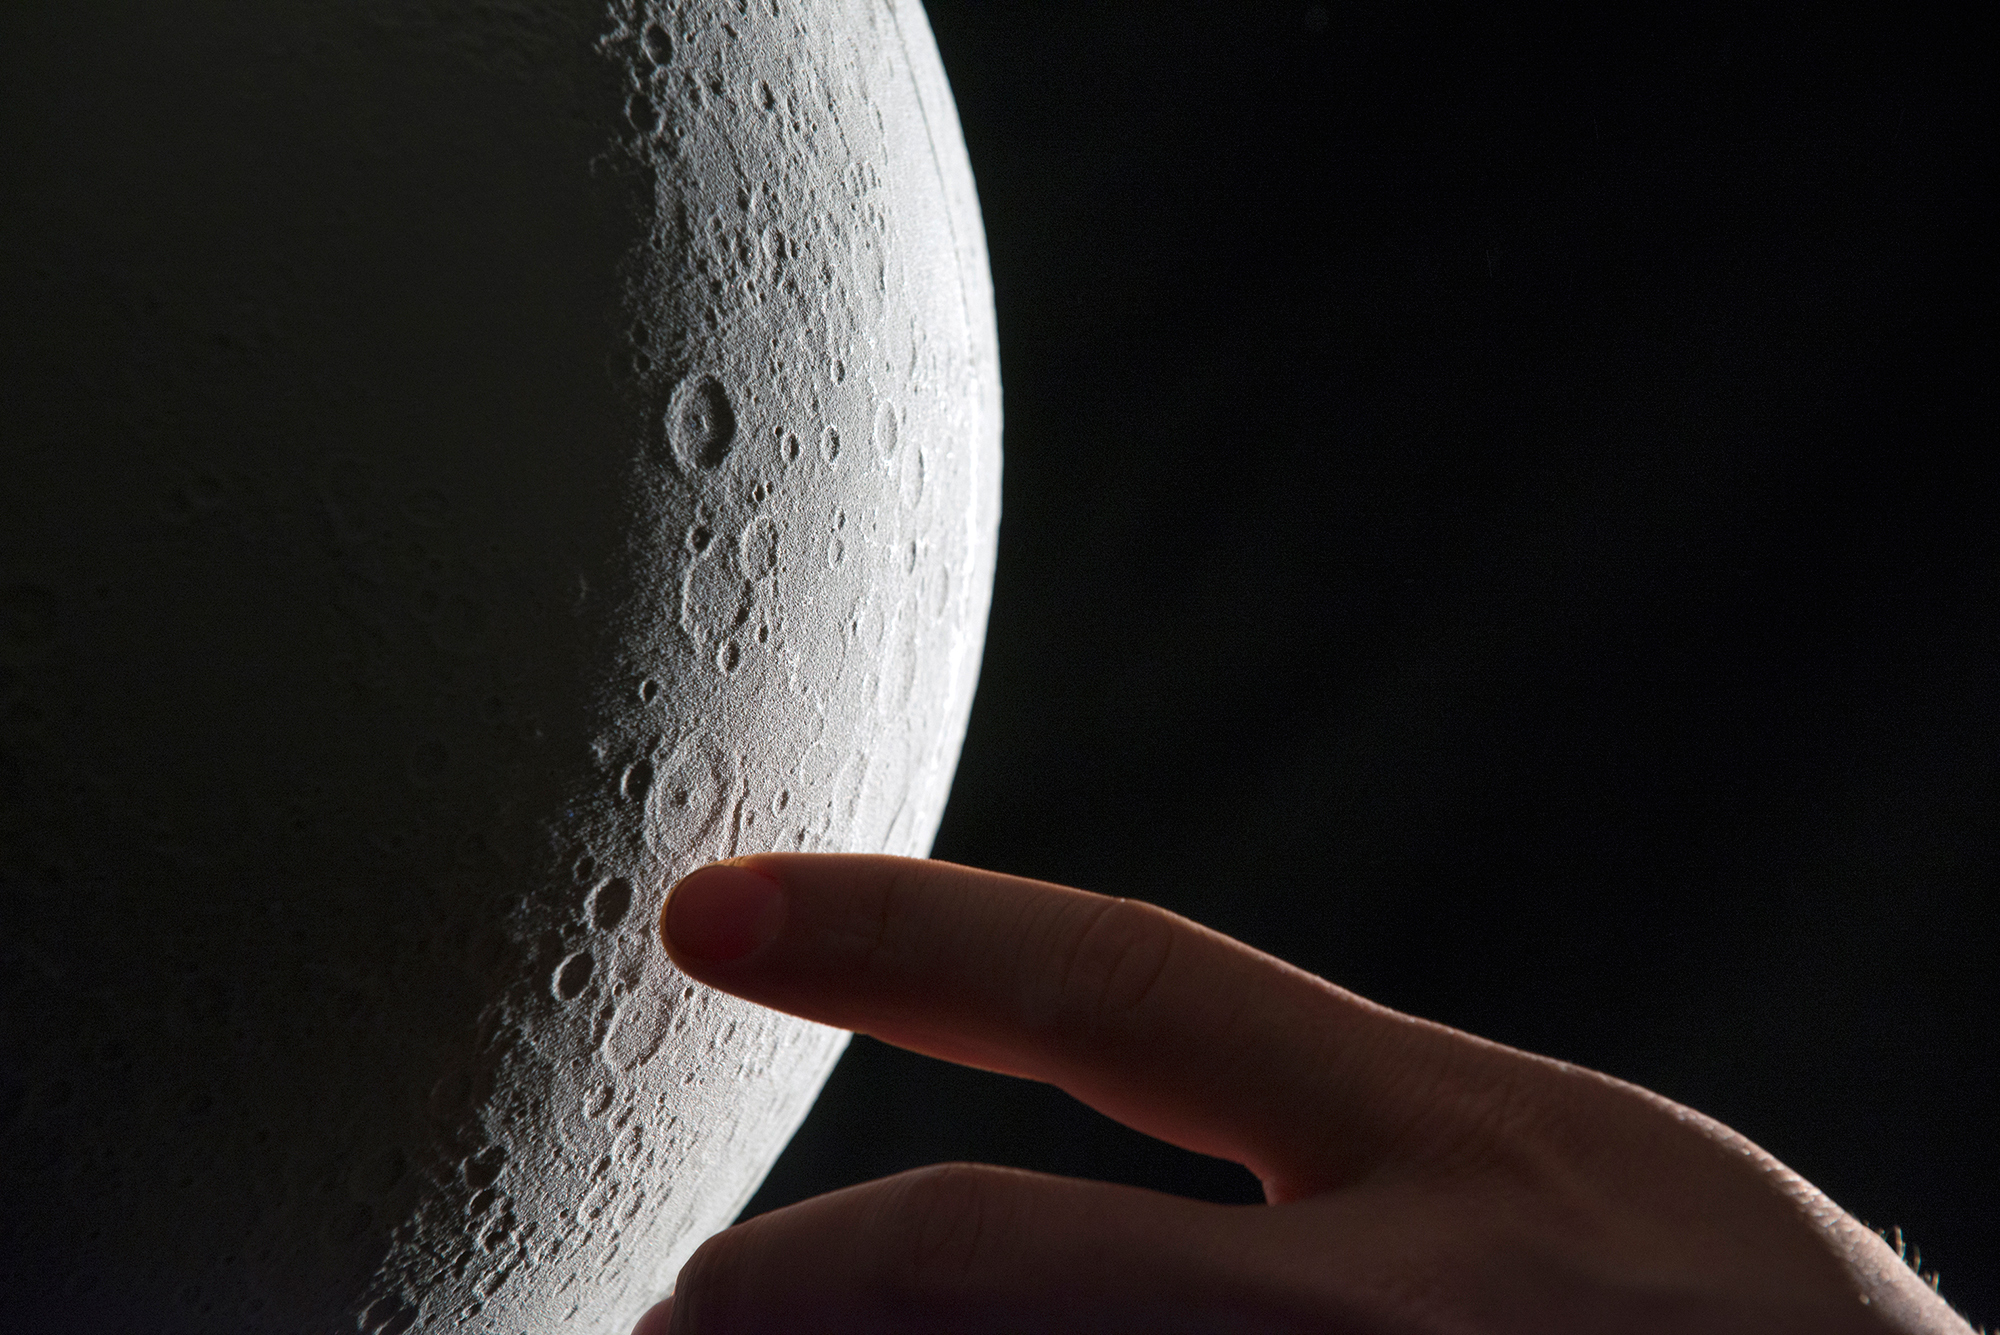  Incredible 3D printed Moon model 